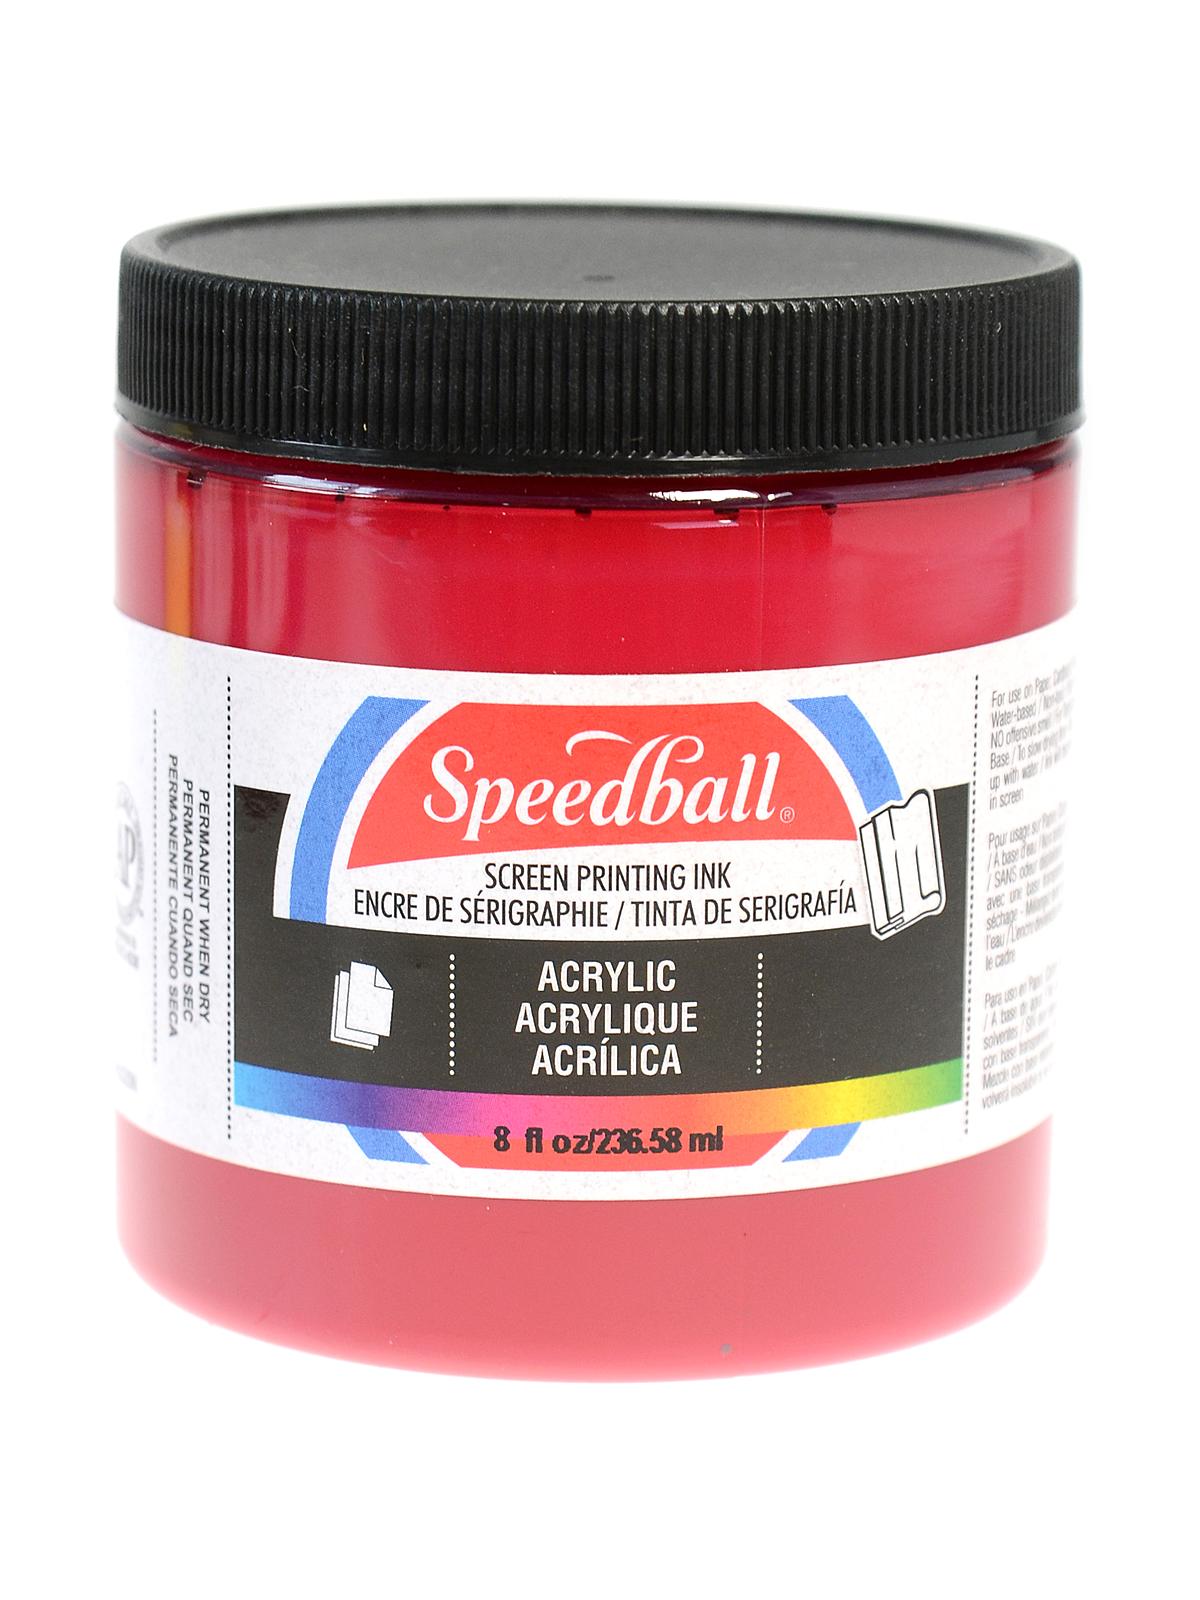 Speedball 8 oz. Acrylic Screen Printing Ink Silver